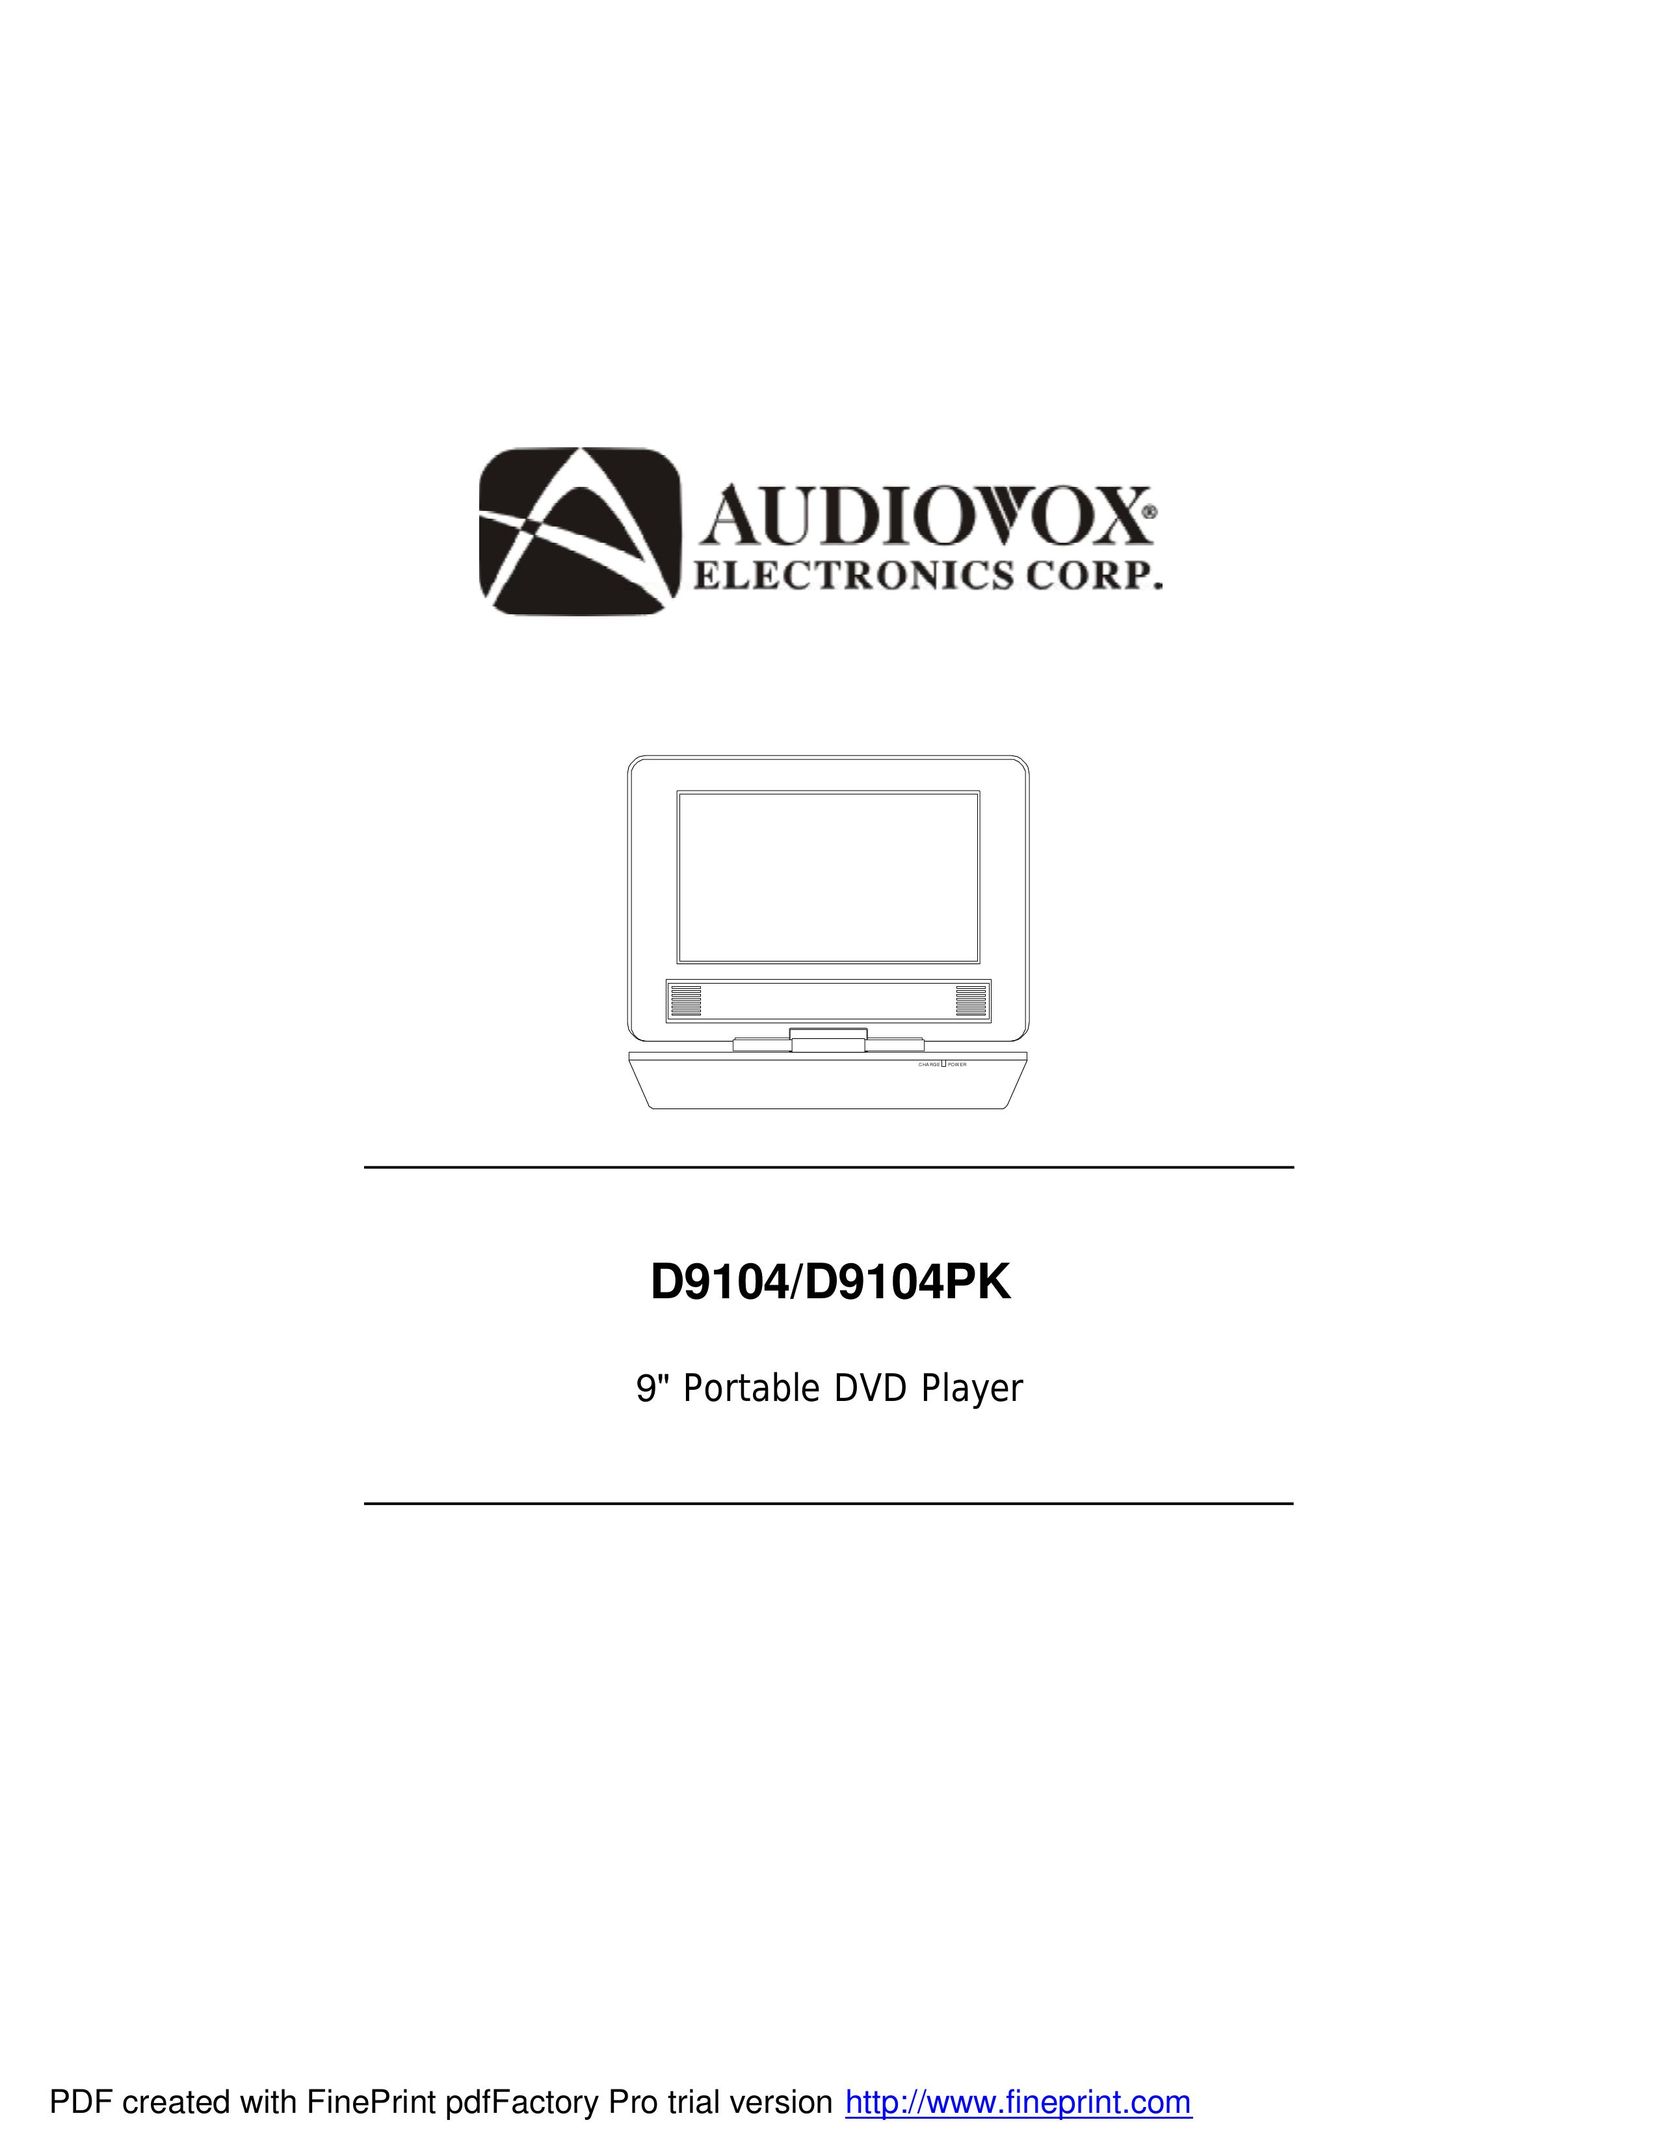 Audiovox D9104 Portable DVD Player User Manual